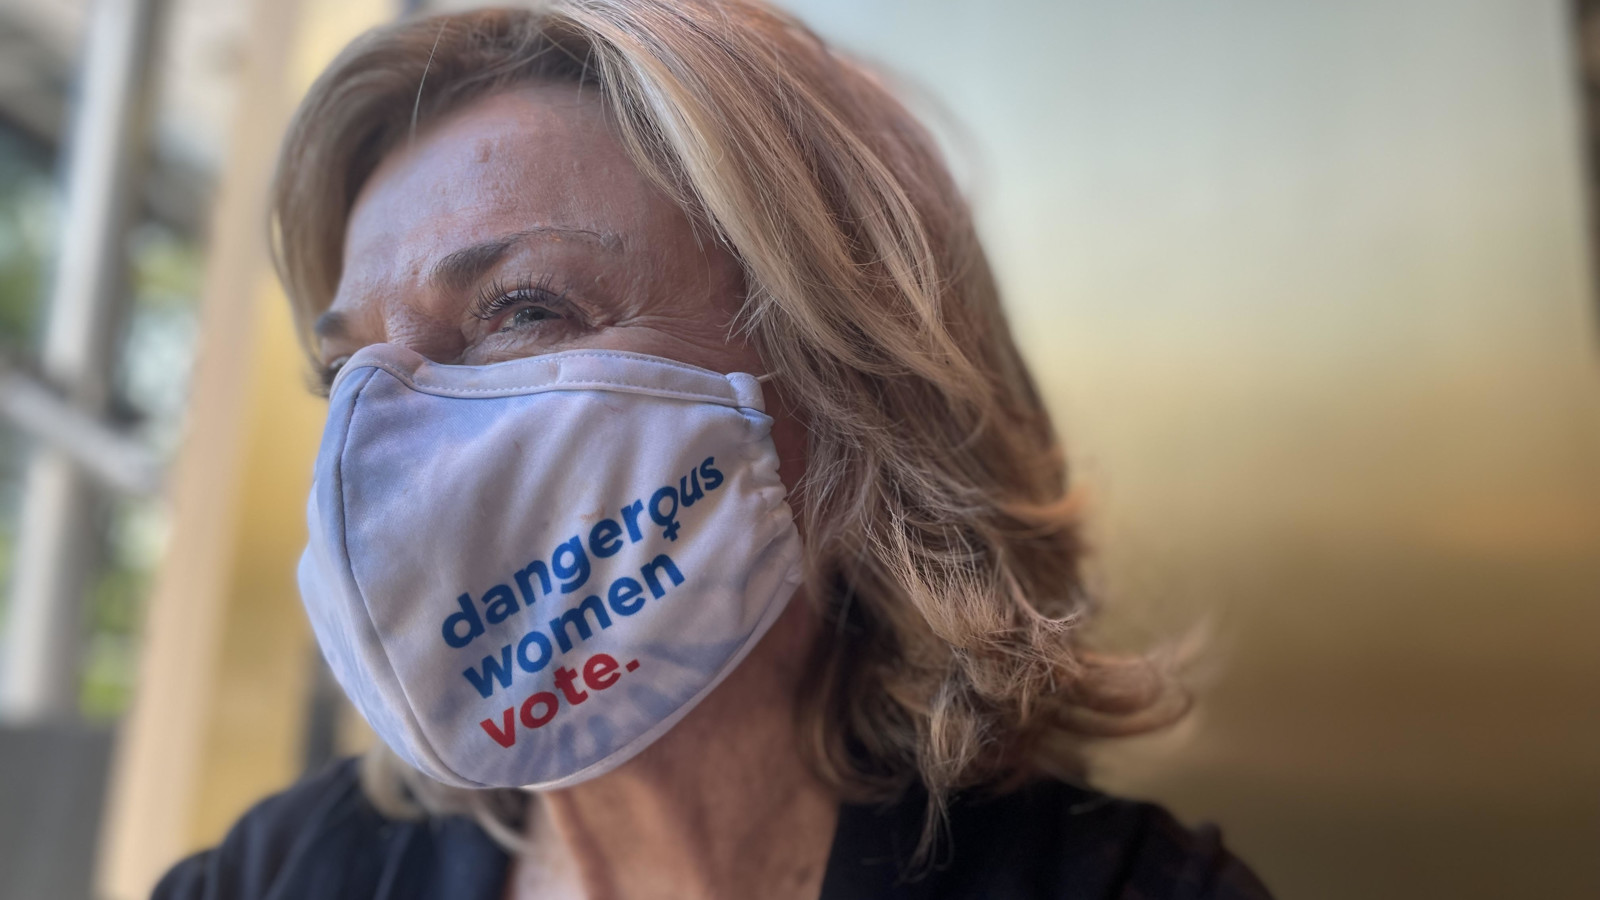 Pat Mitchell wearing her 'Dangerous Women Vote' mask.